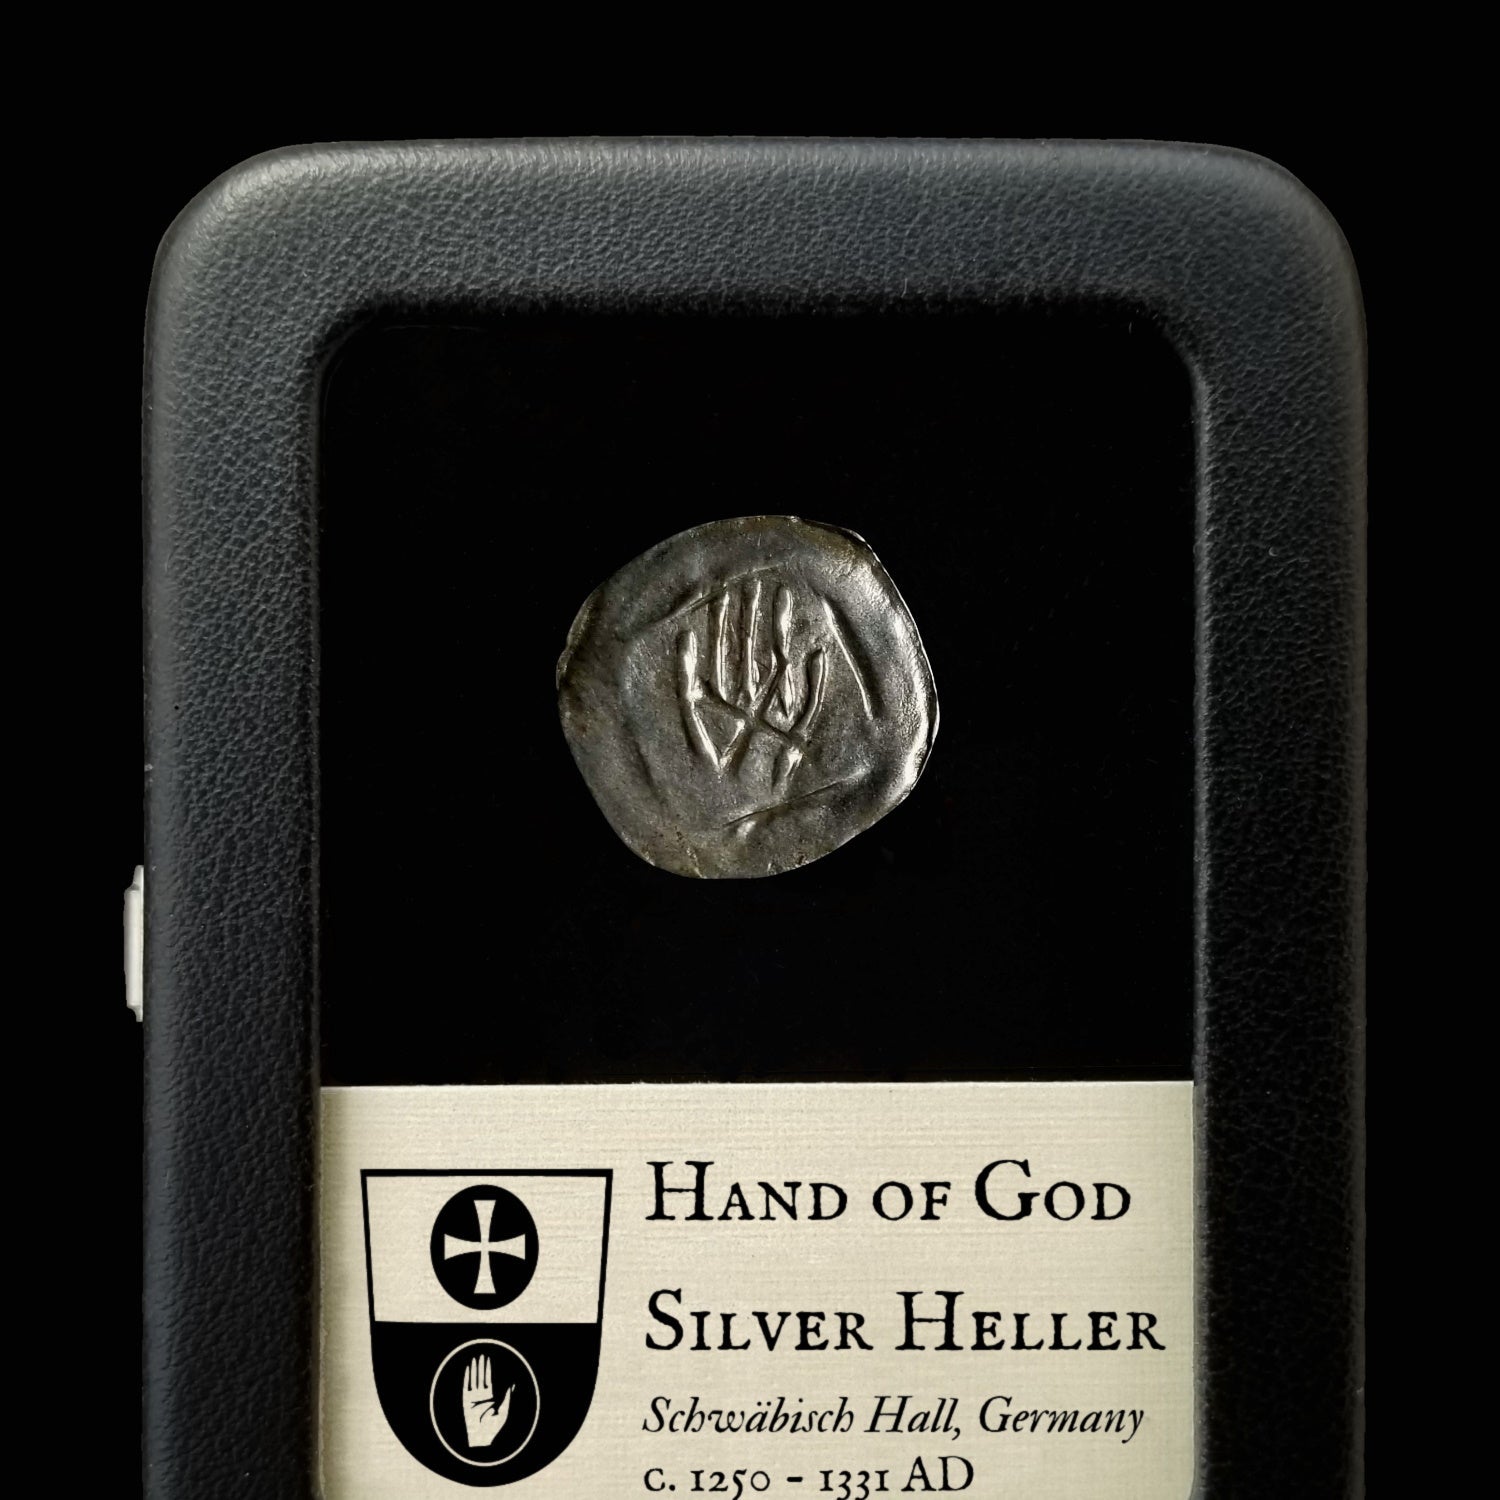 Germany, "Hand of God" Heller - 1250 AD